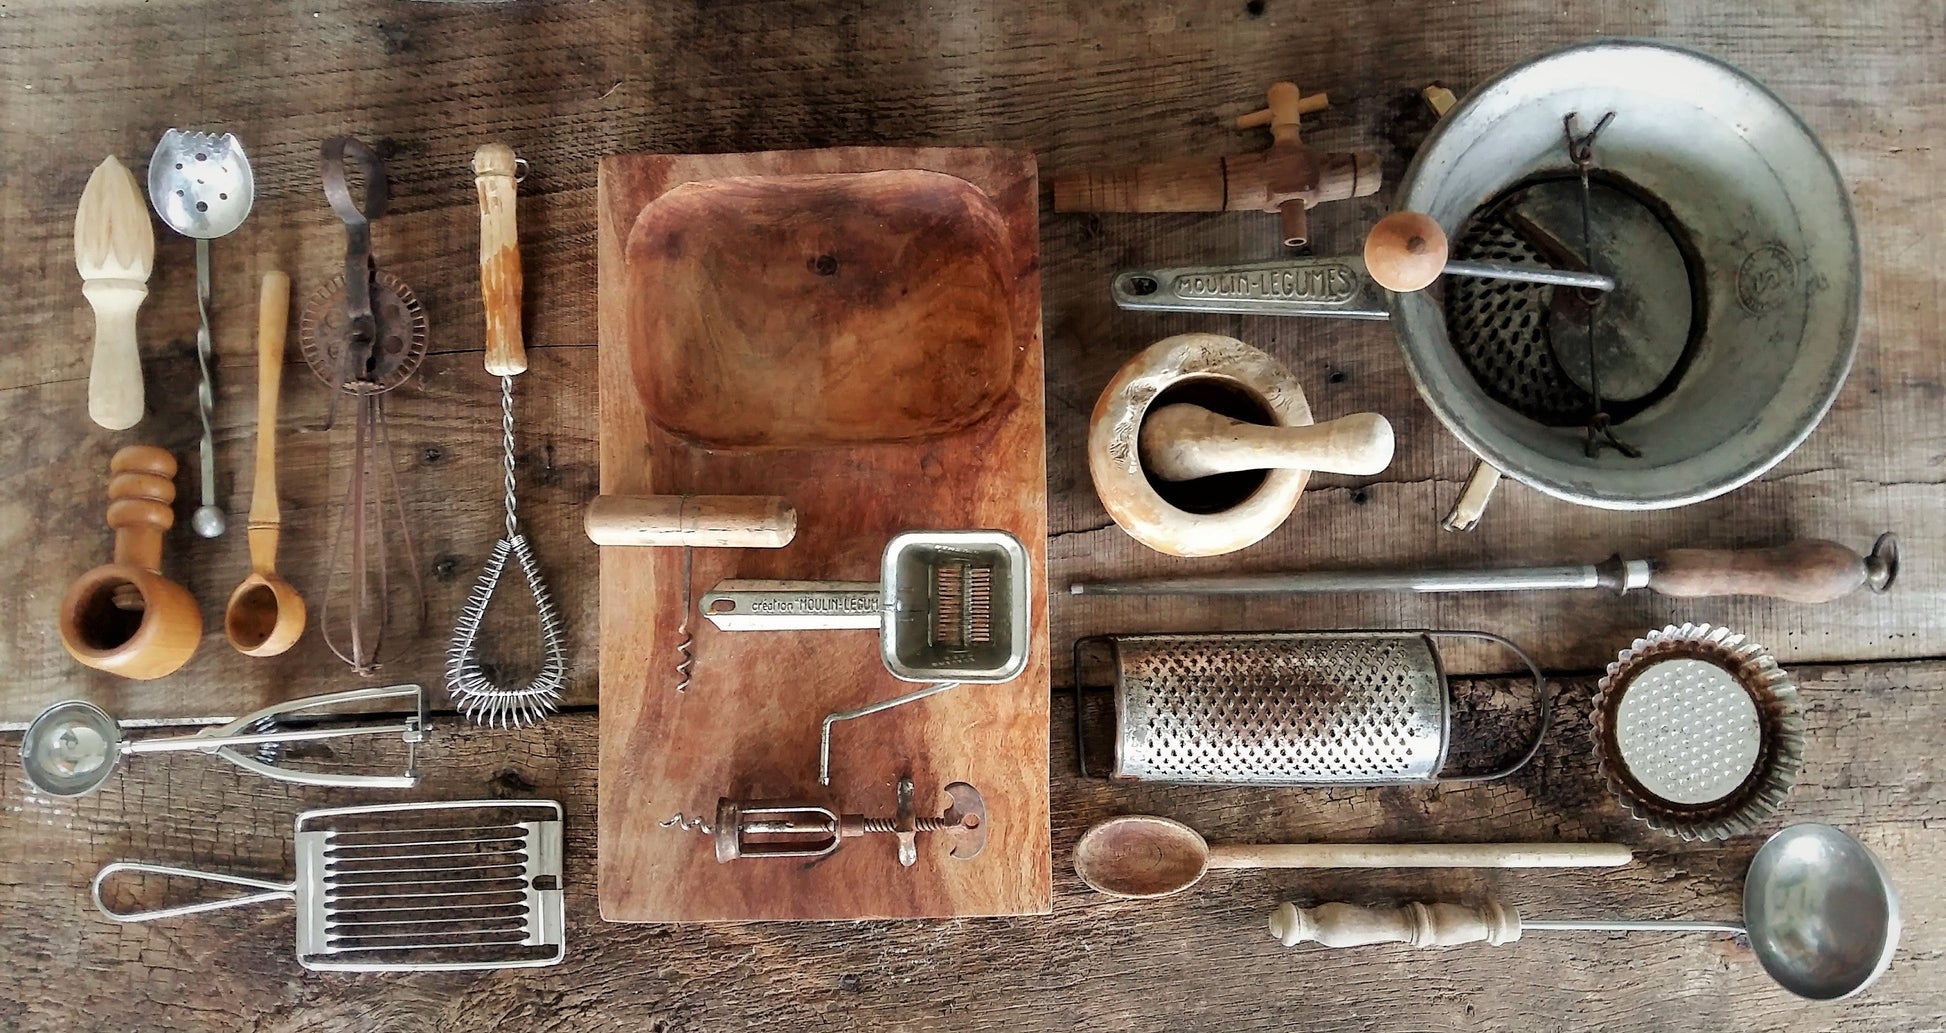 Vintage Large Whisk / Primitive Country Decor / Antique Kitchen Tools 